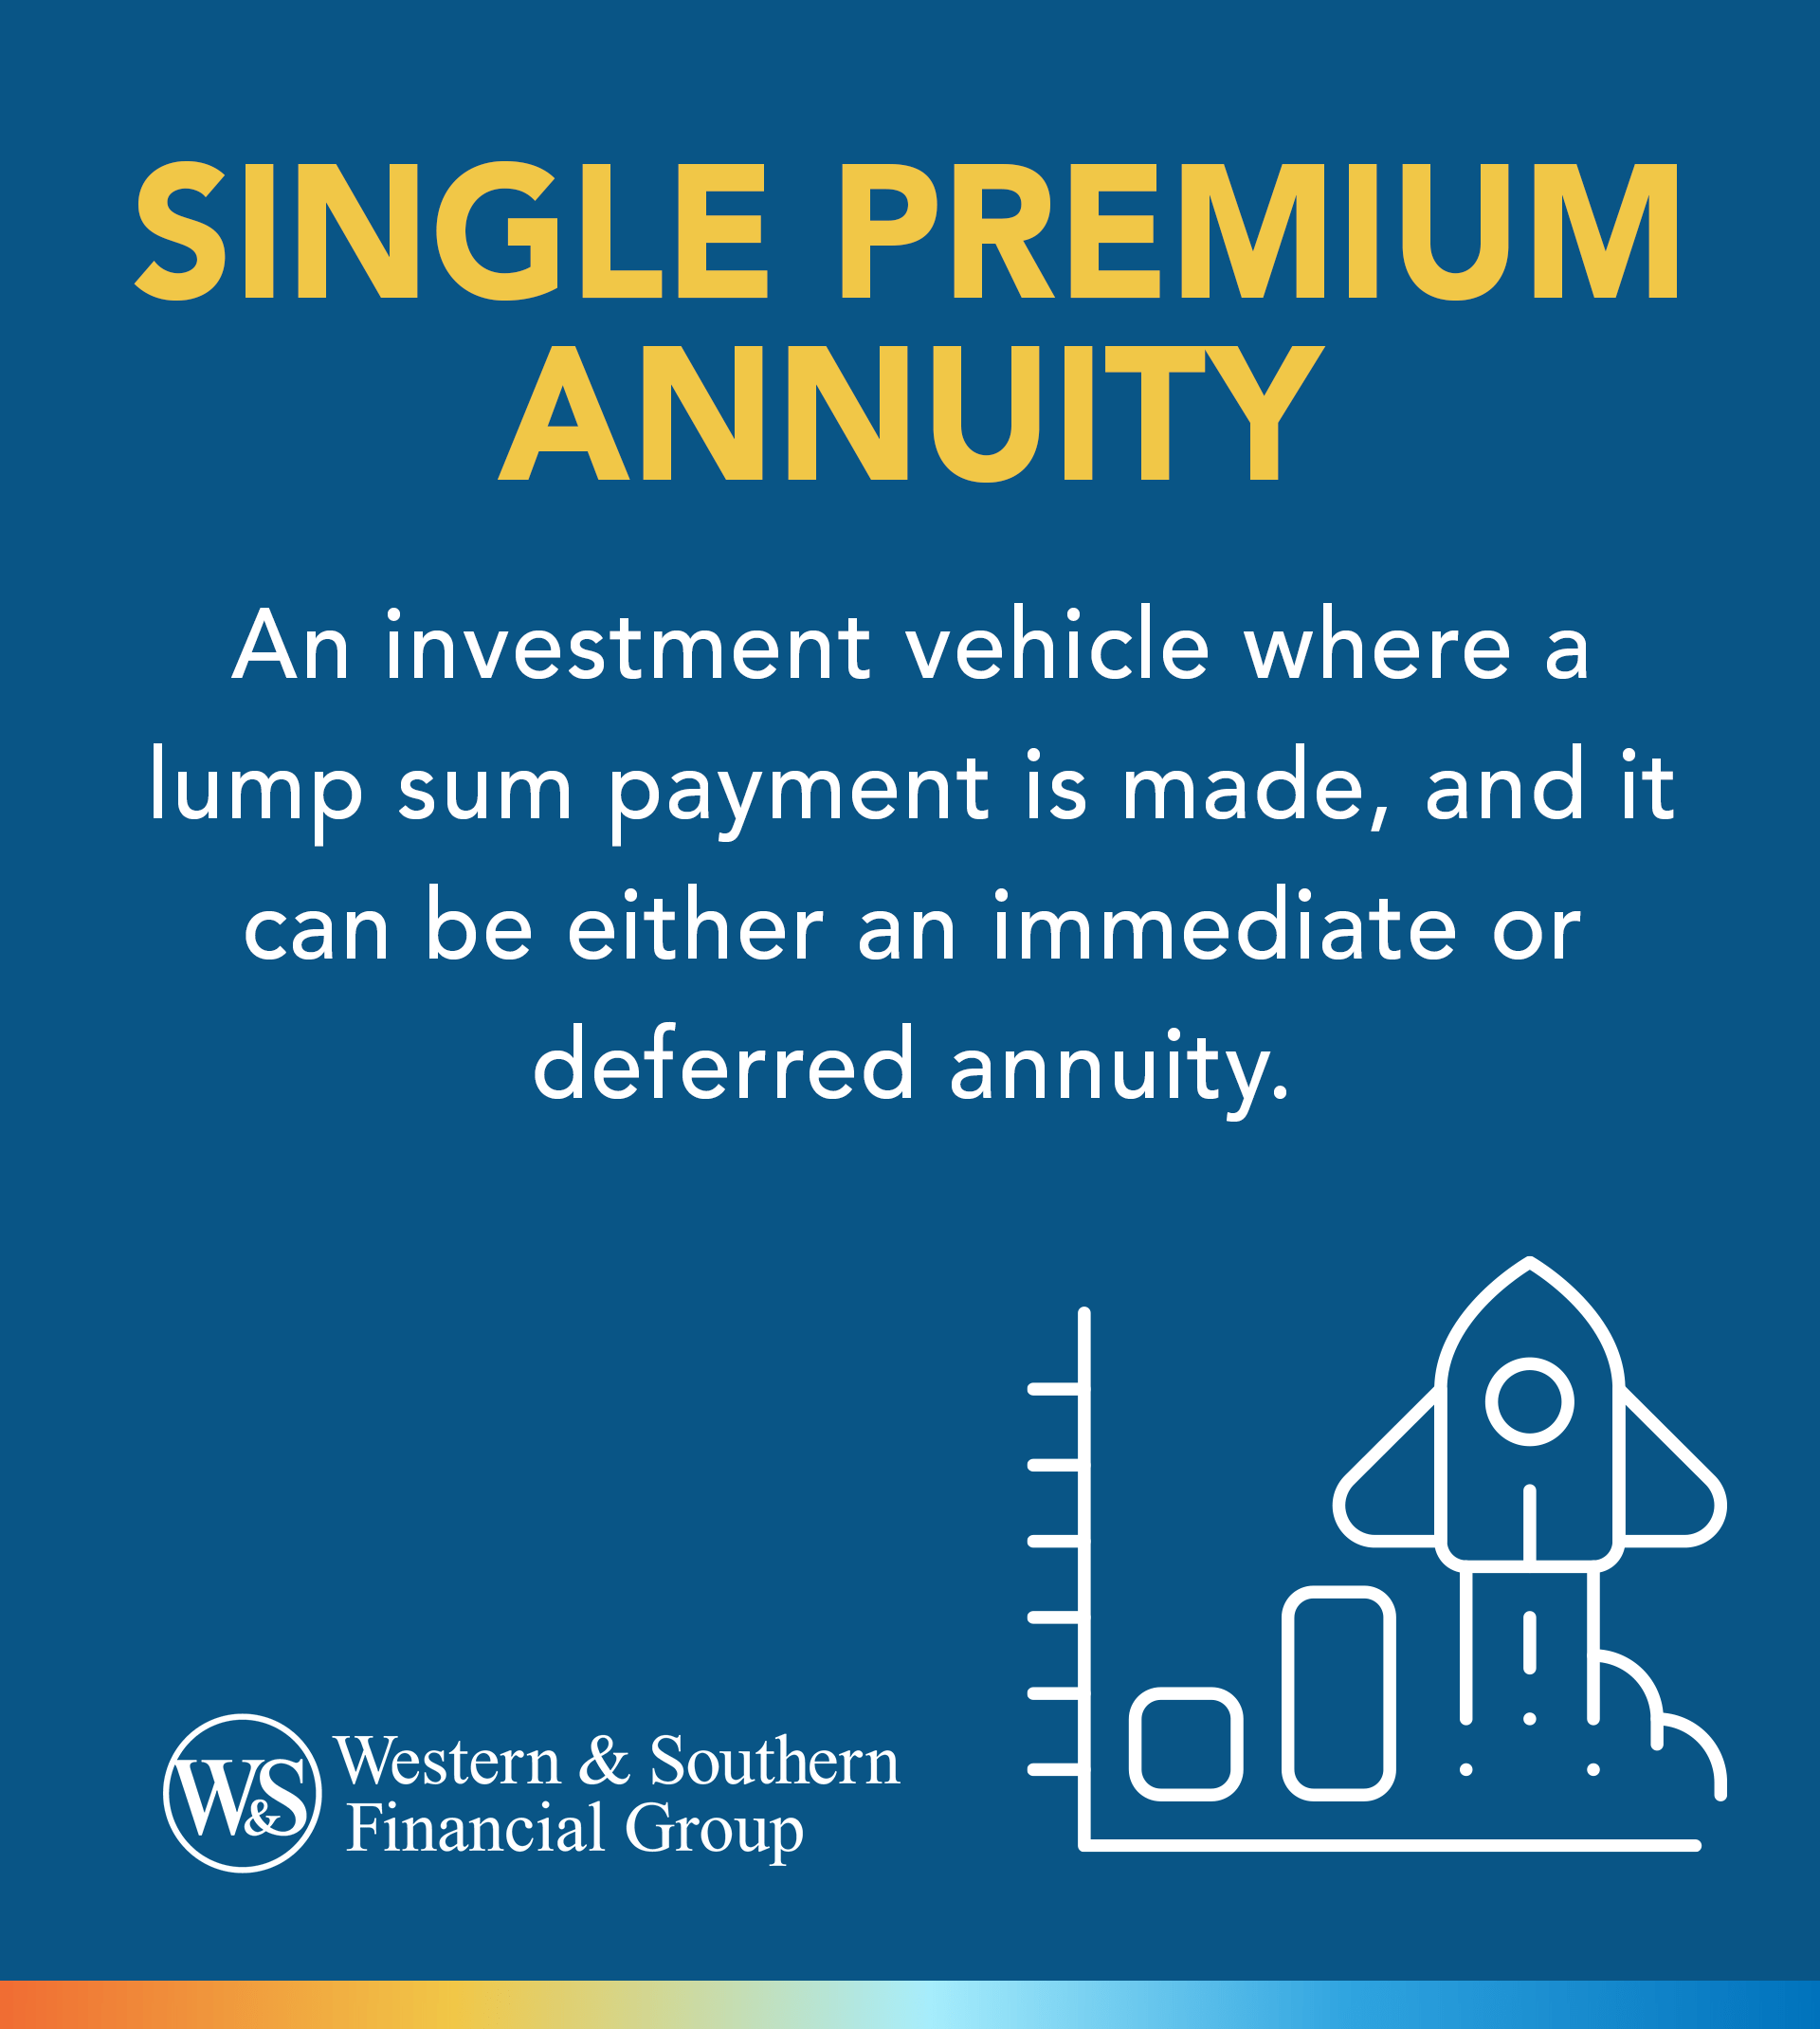 Single Premium Annuity definition